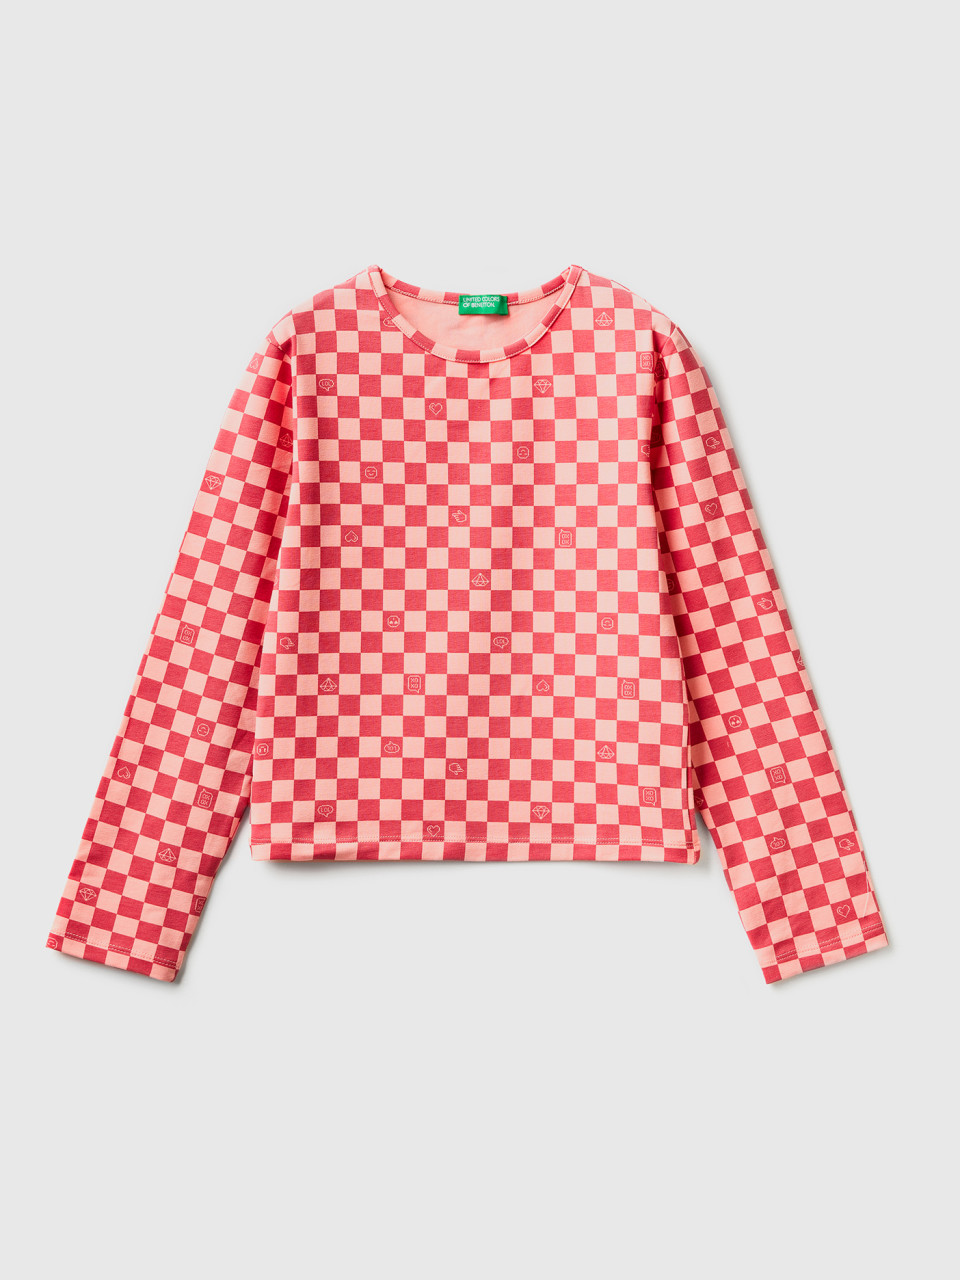 Benetton, Checkered Stretch Cotton T-shirt, Red, Kids